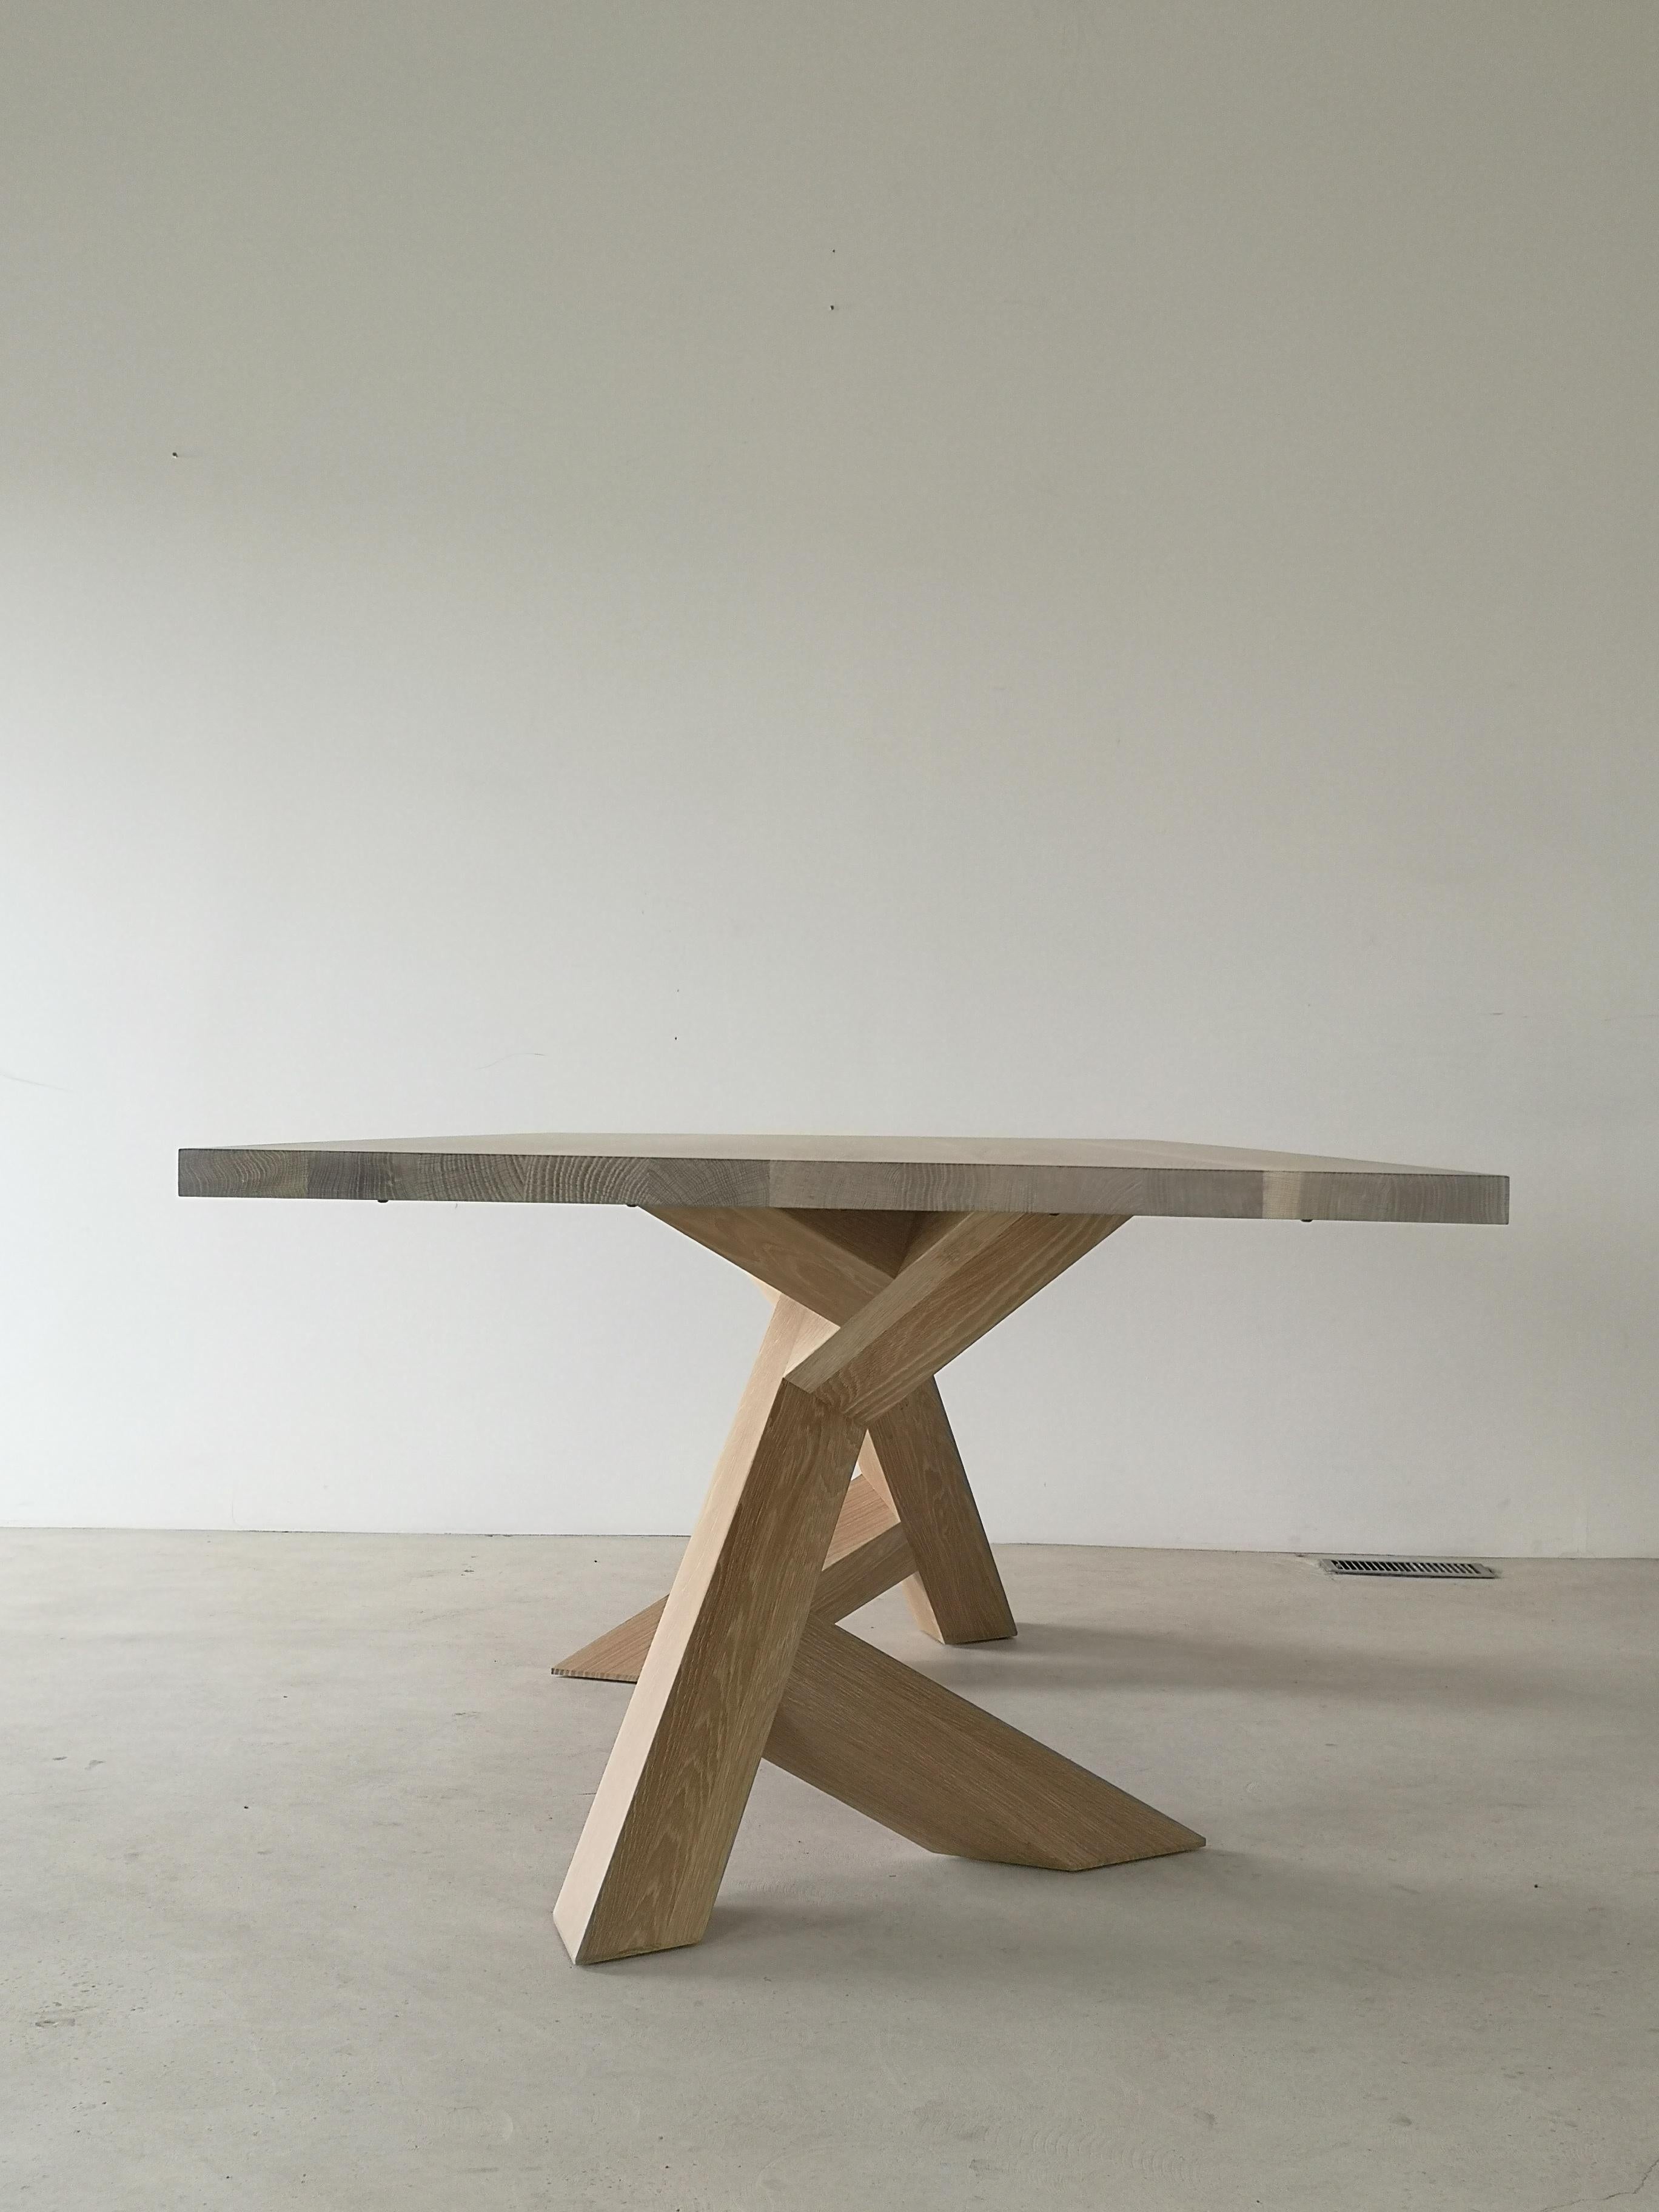 iconoclast table